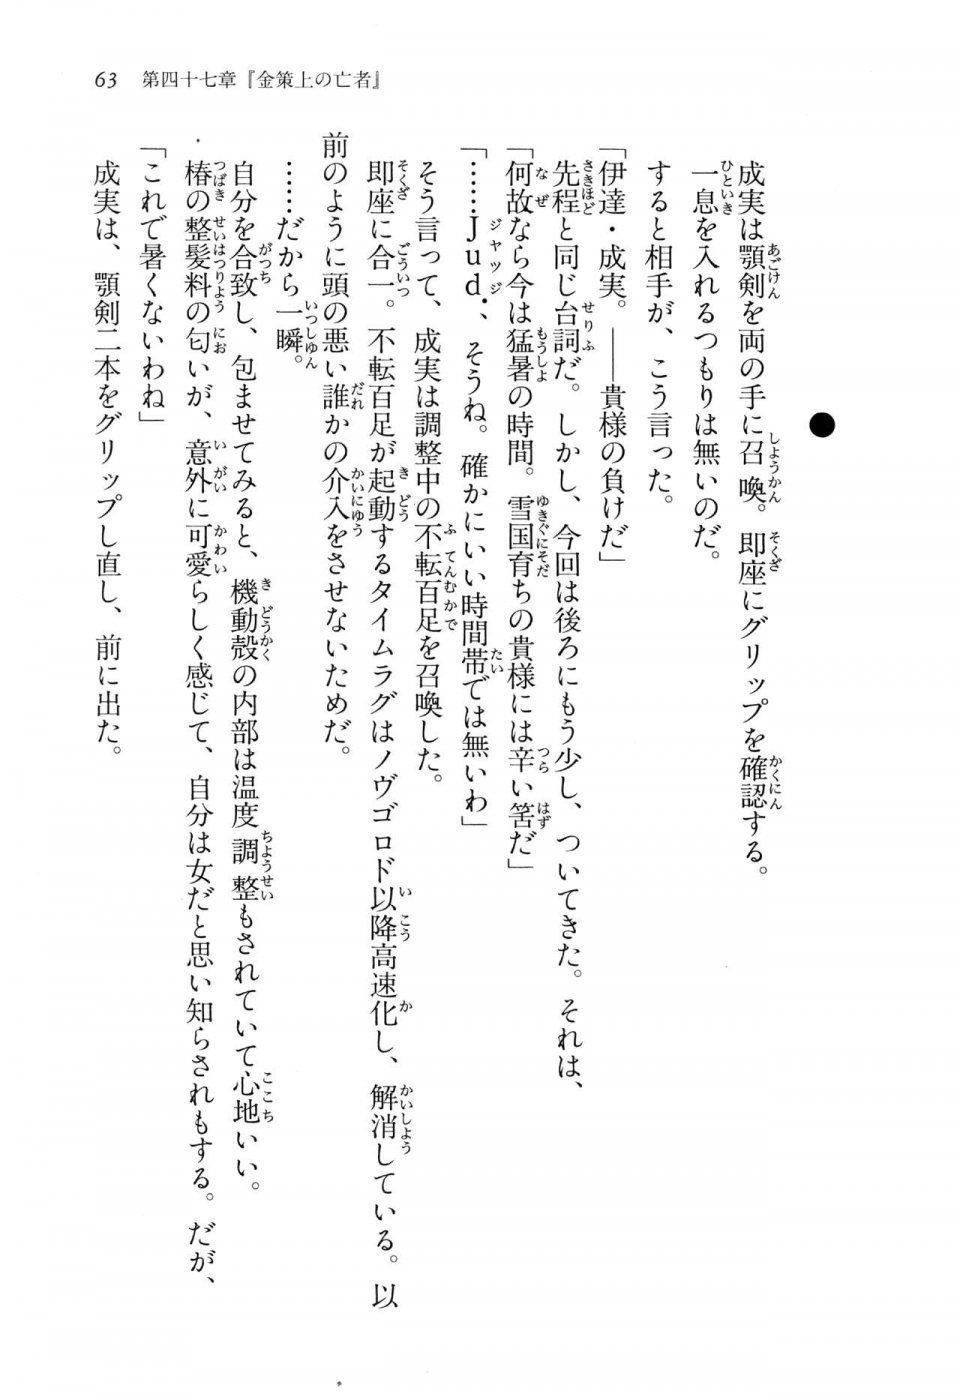 Kyoukai Senjou no Horizon LN Vol 15(6C) Part 1 - Photo #63